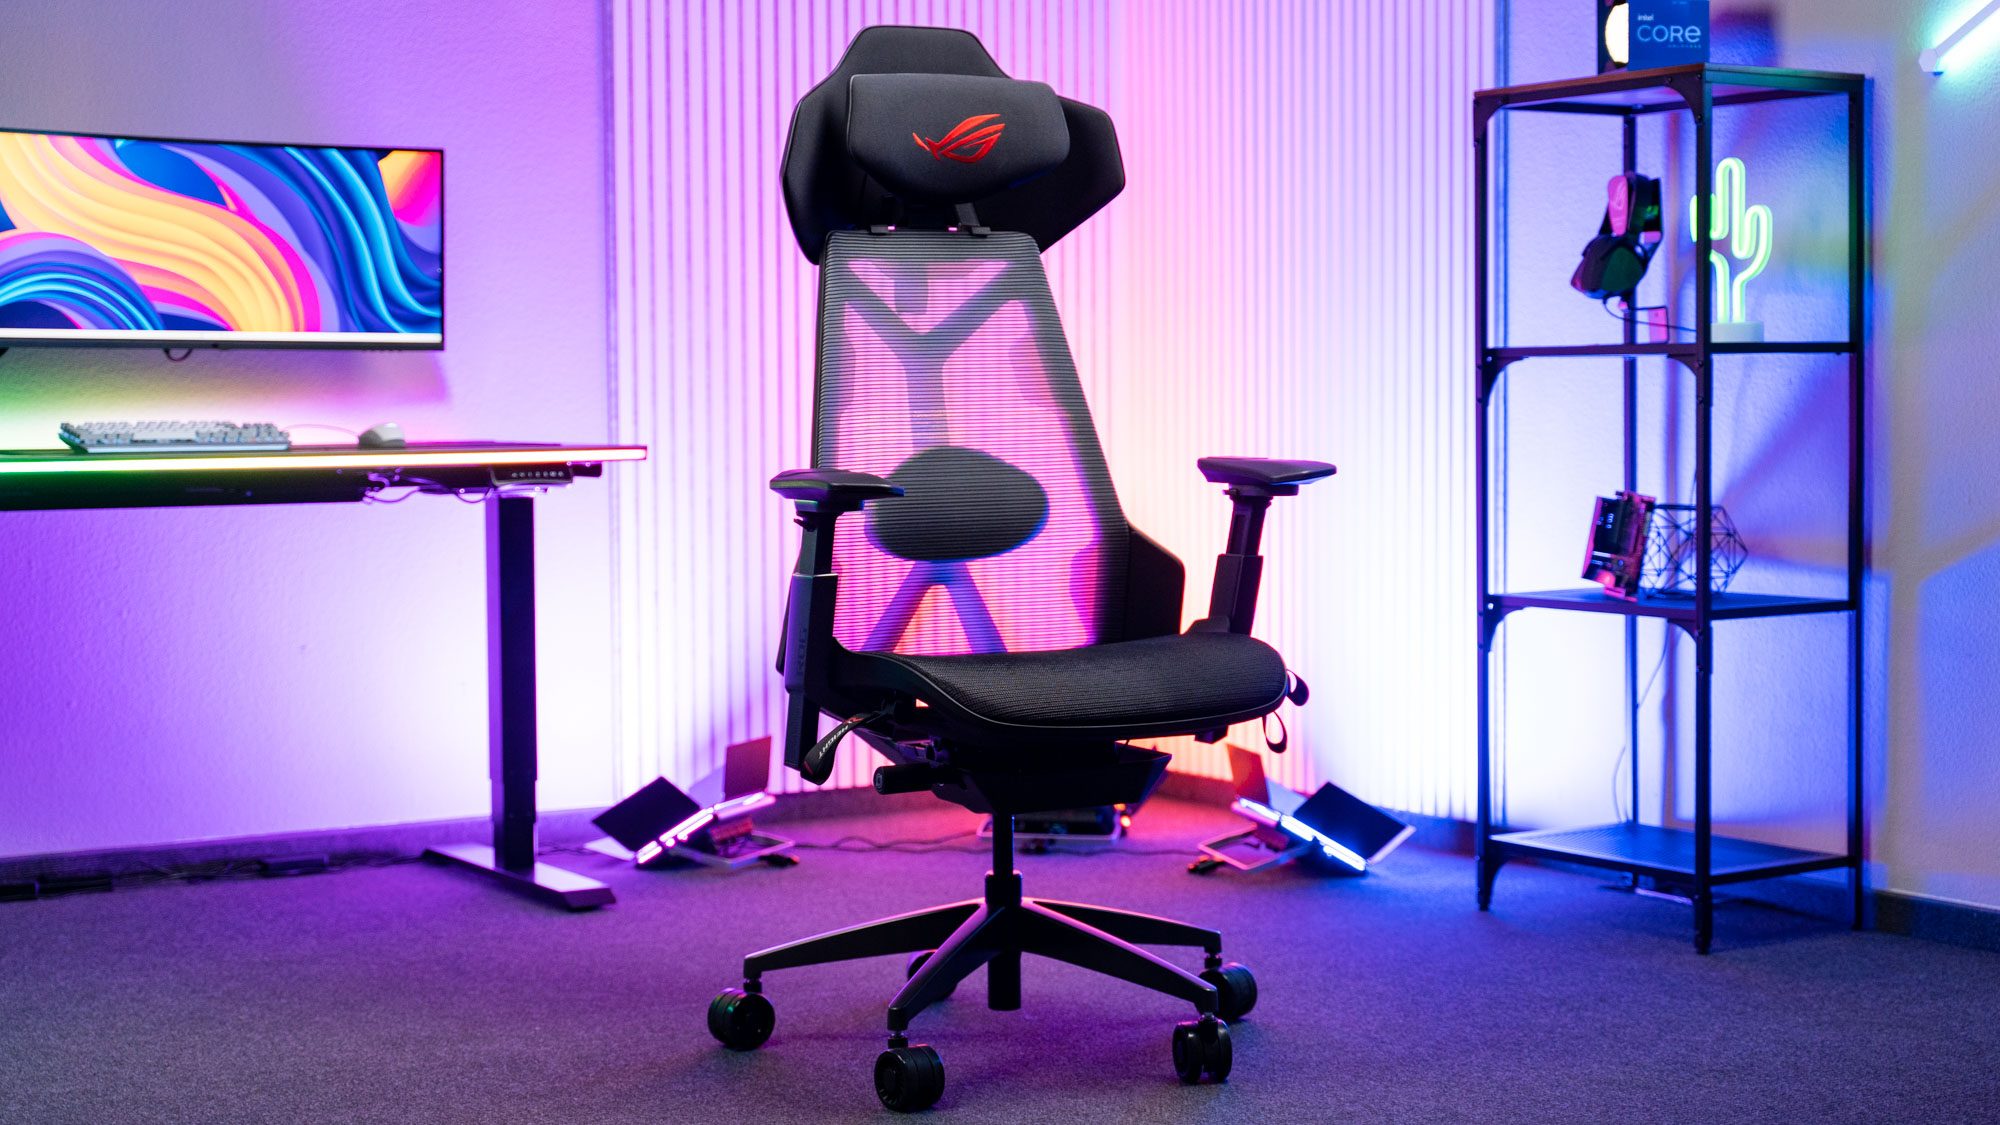 Asus ROG Destrier Ergo Gaming Chair Büro Stuhl Test Review